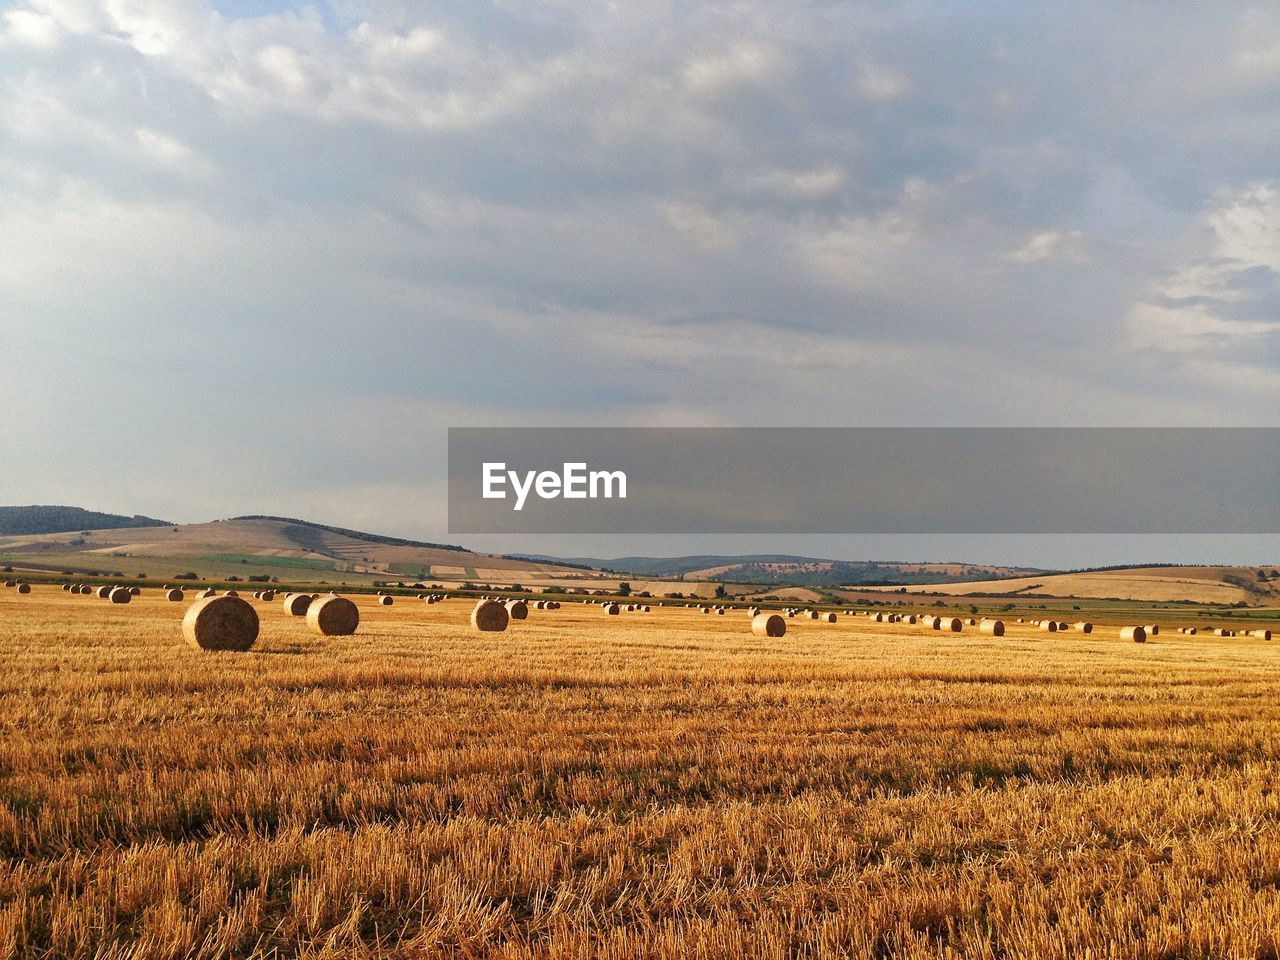 Hay bales on landscape against sky